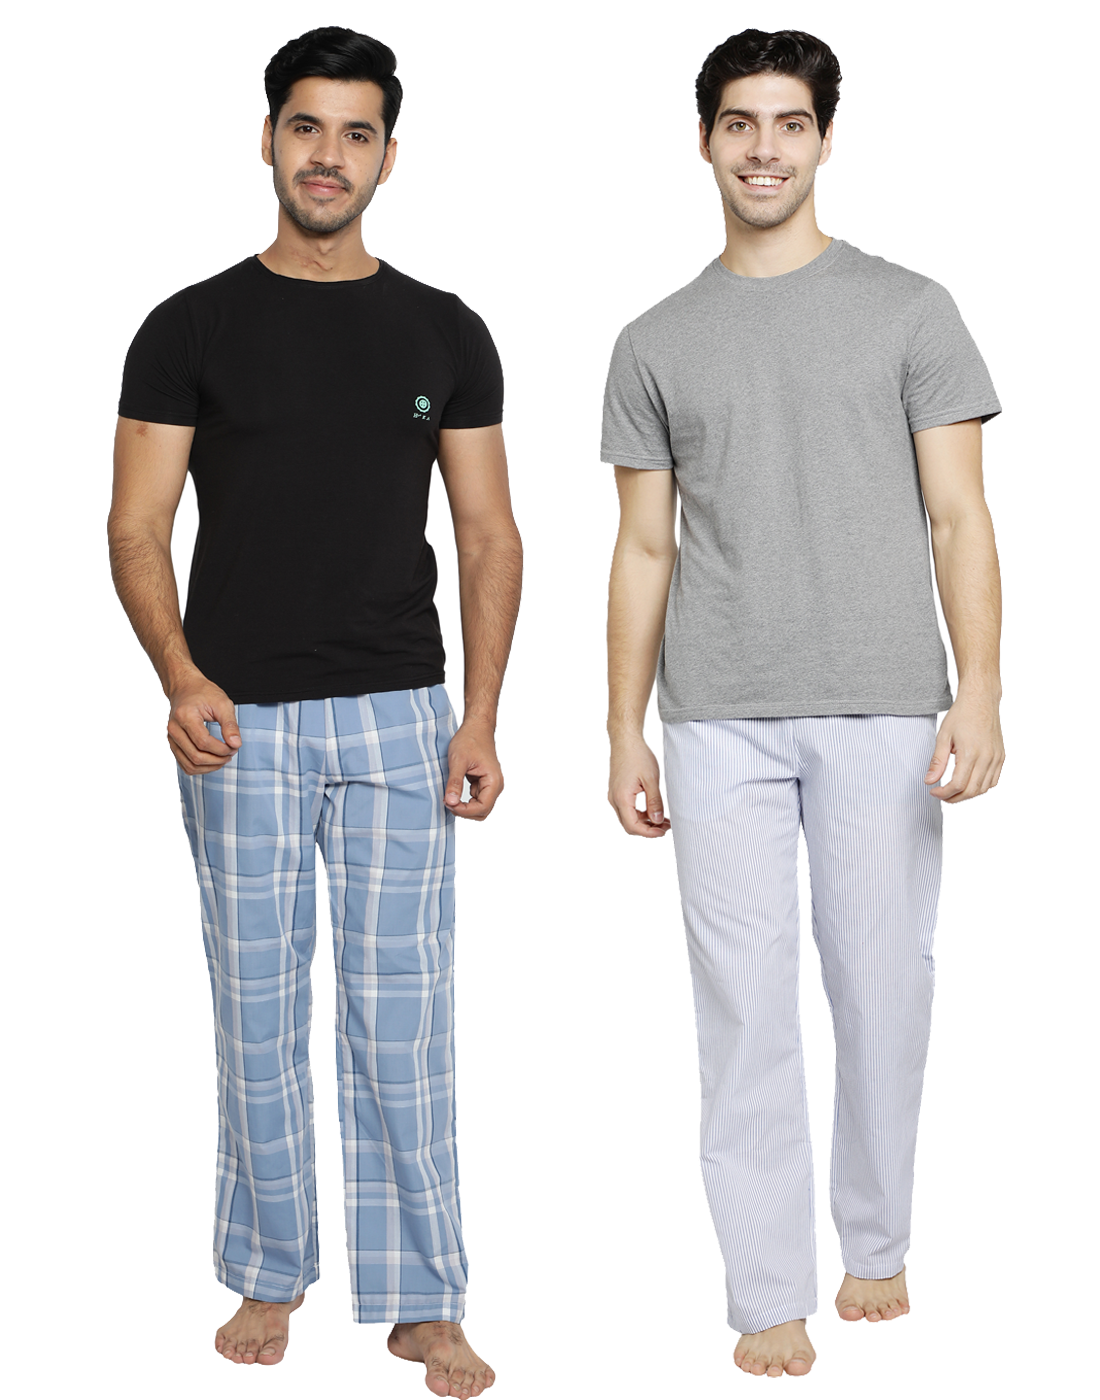 Lounge Pant for Men-Blue Checks & Stripes(Pack of 2)